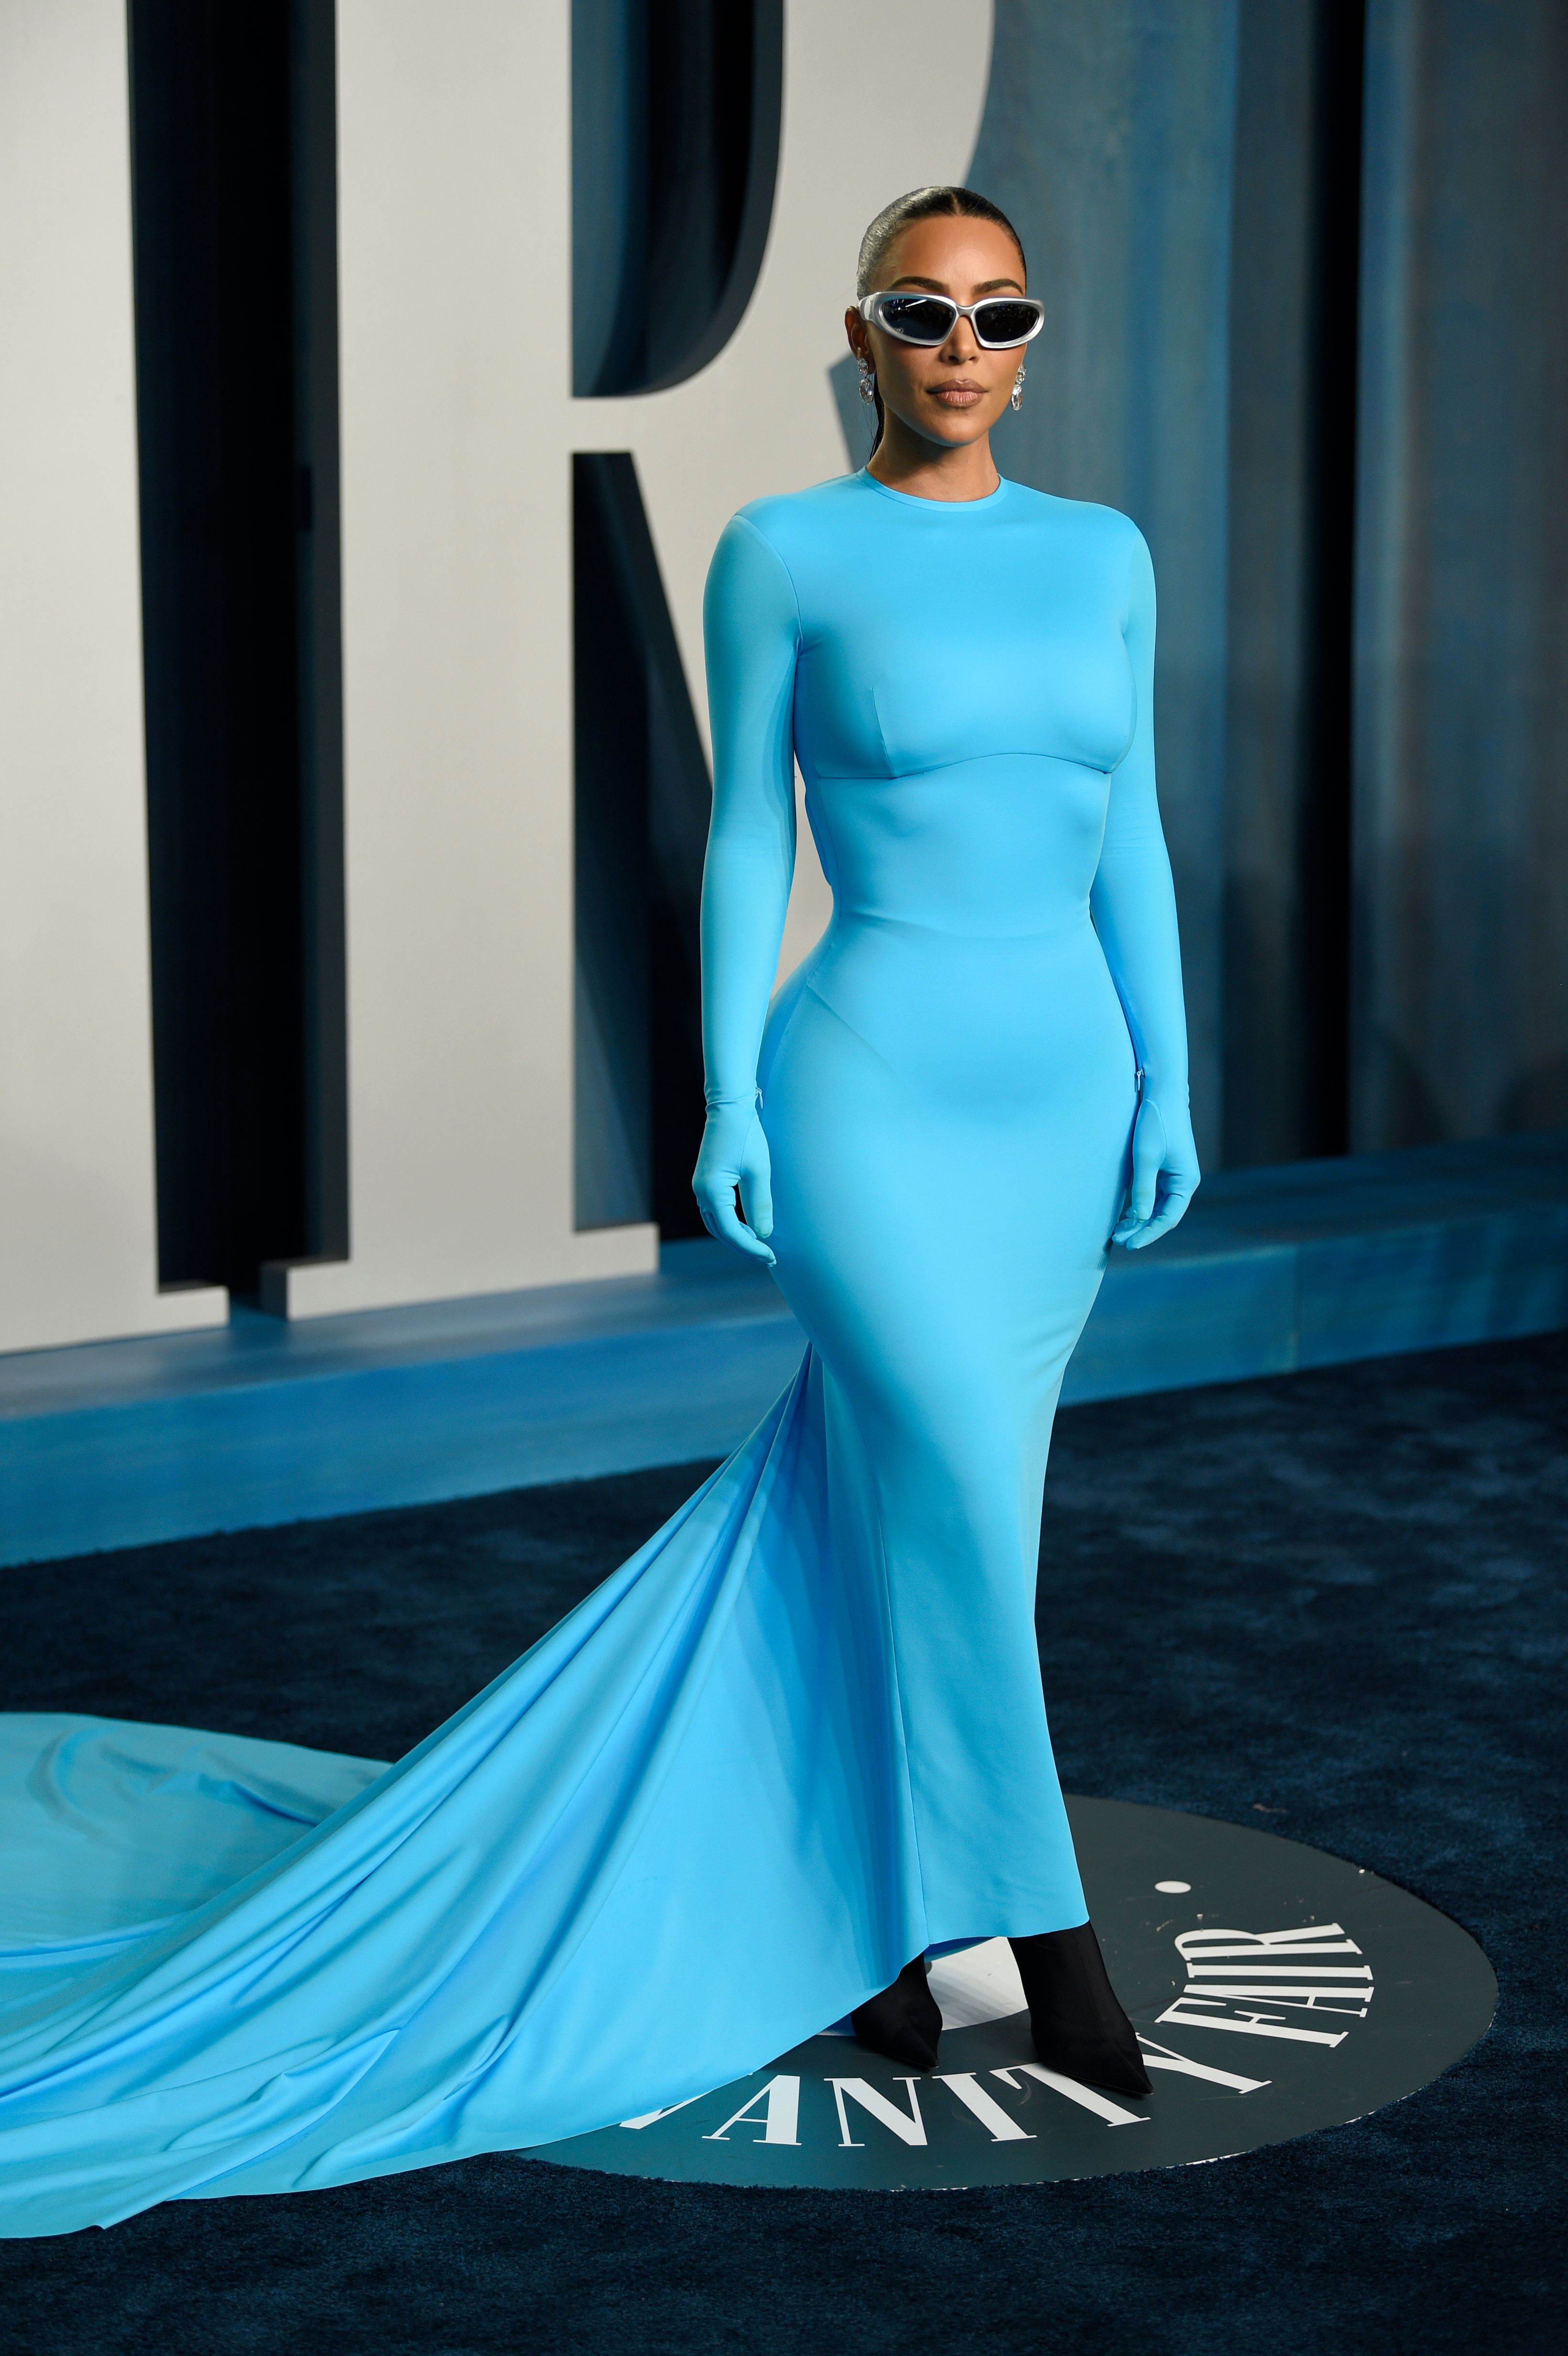 Kim Kardashian reveals wearing three layers of shape-wear